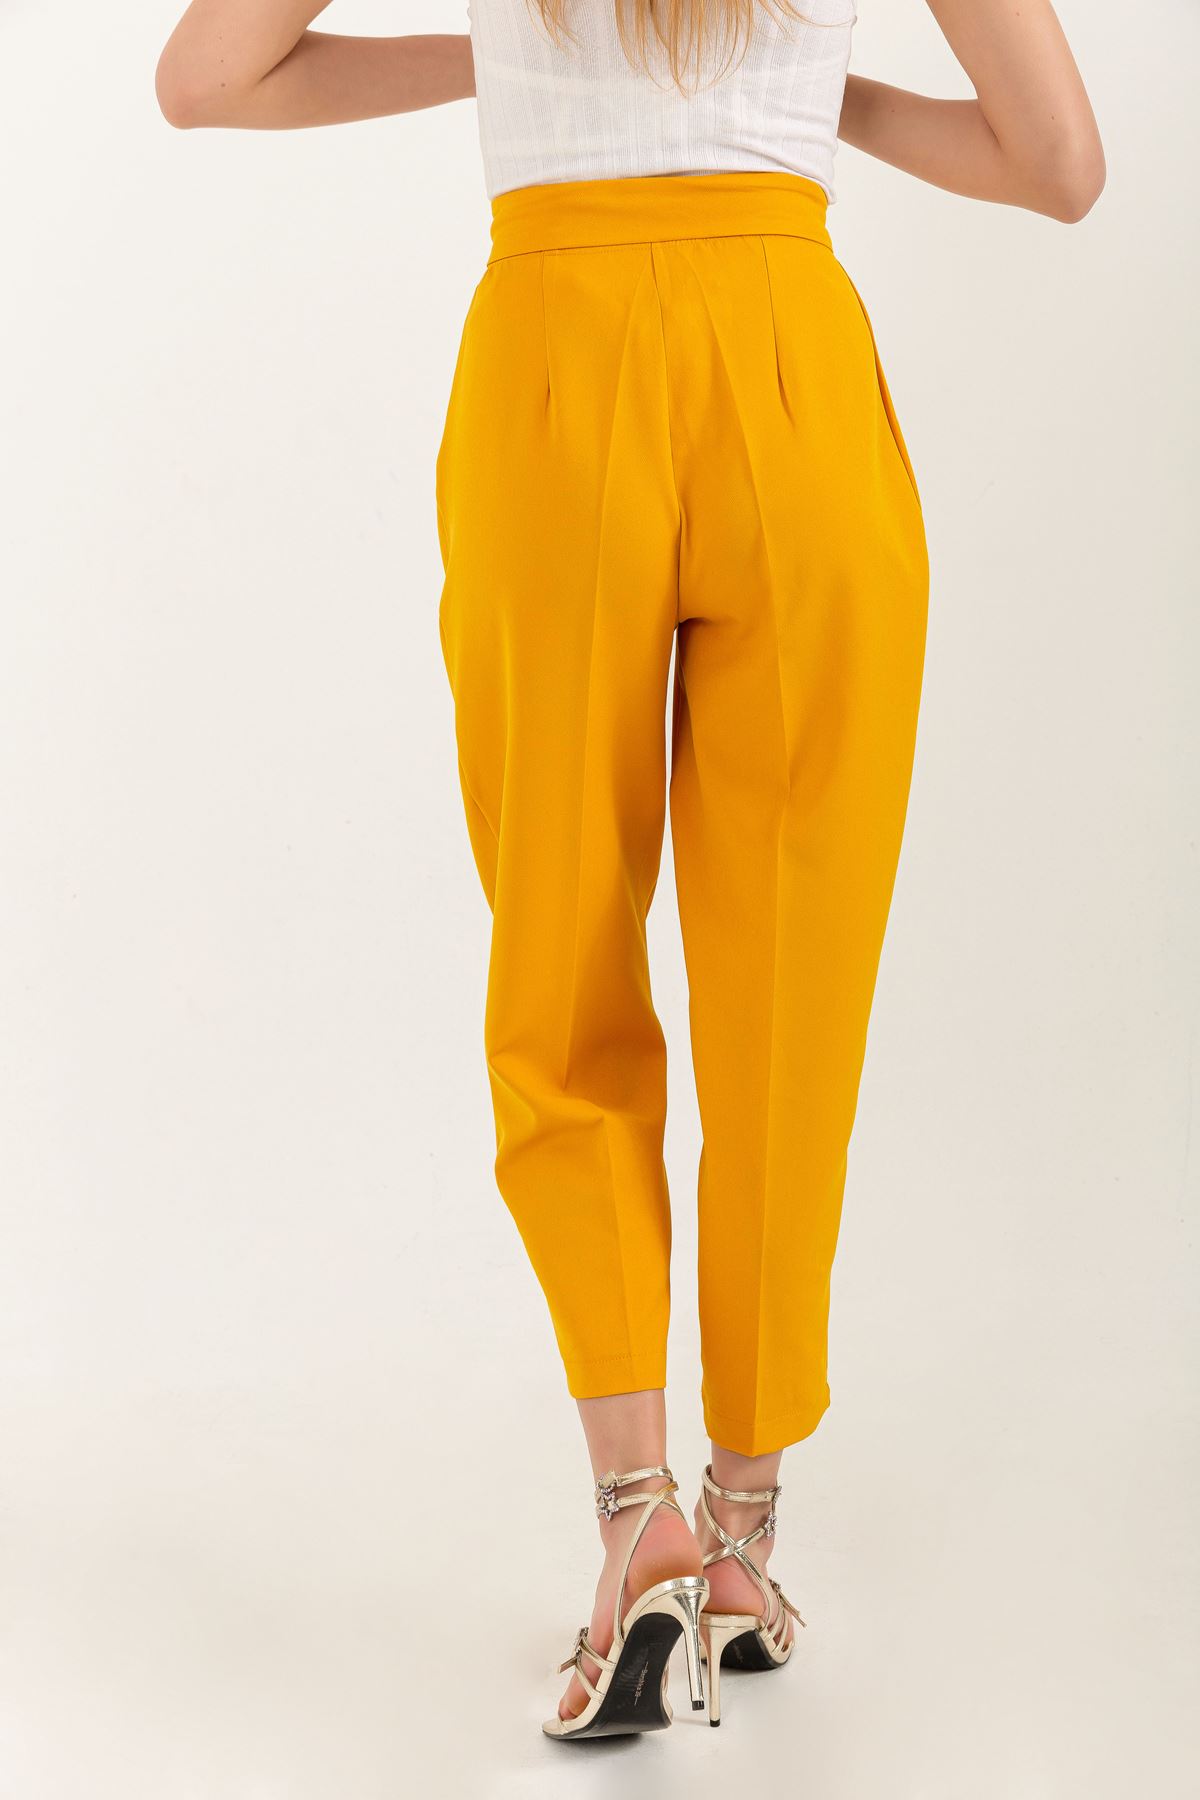 Atlas Fabric Ankle Length Carrot Style Women Trouser-Mustard